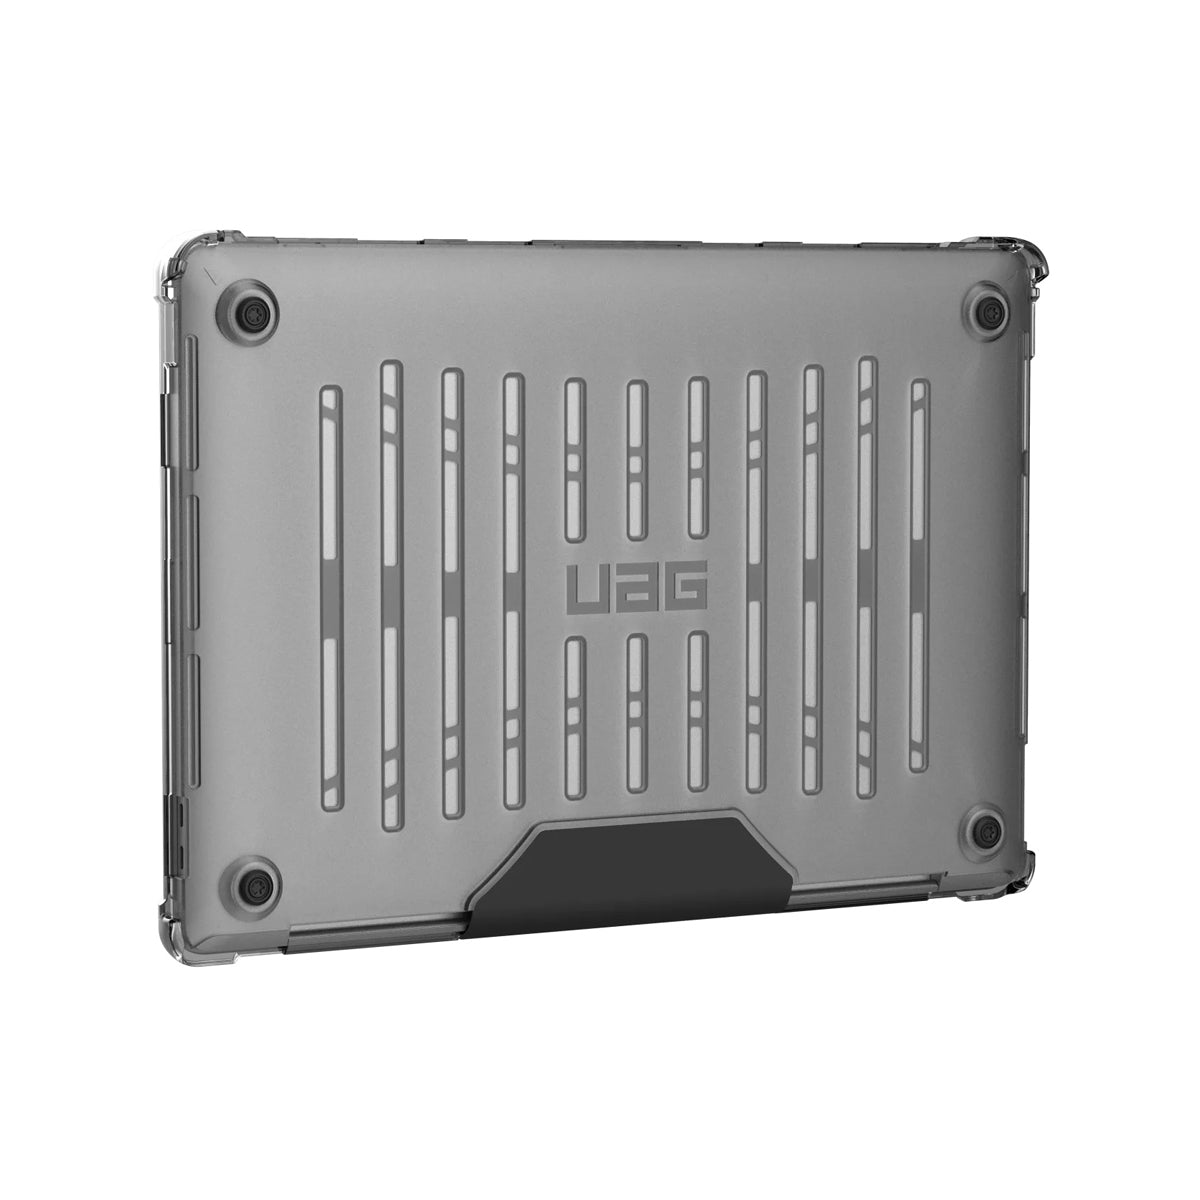 UAG Plyo Series Case for MacBook Pro 13 M1/M2 2020-22 - Ice.